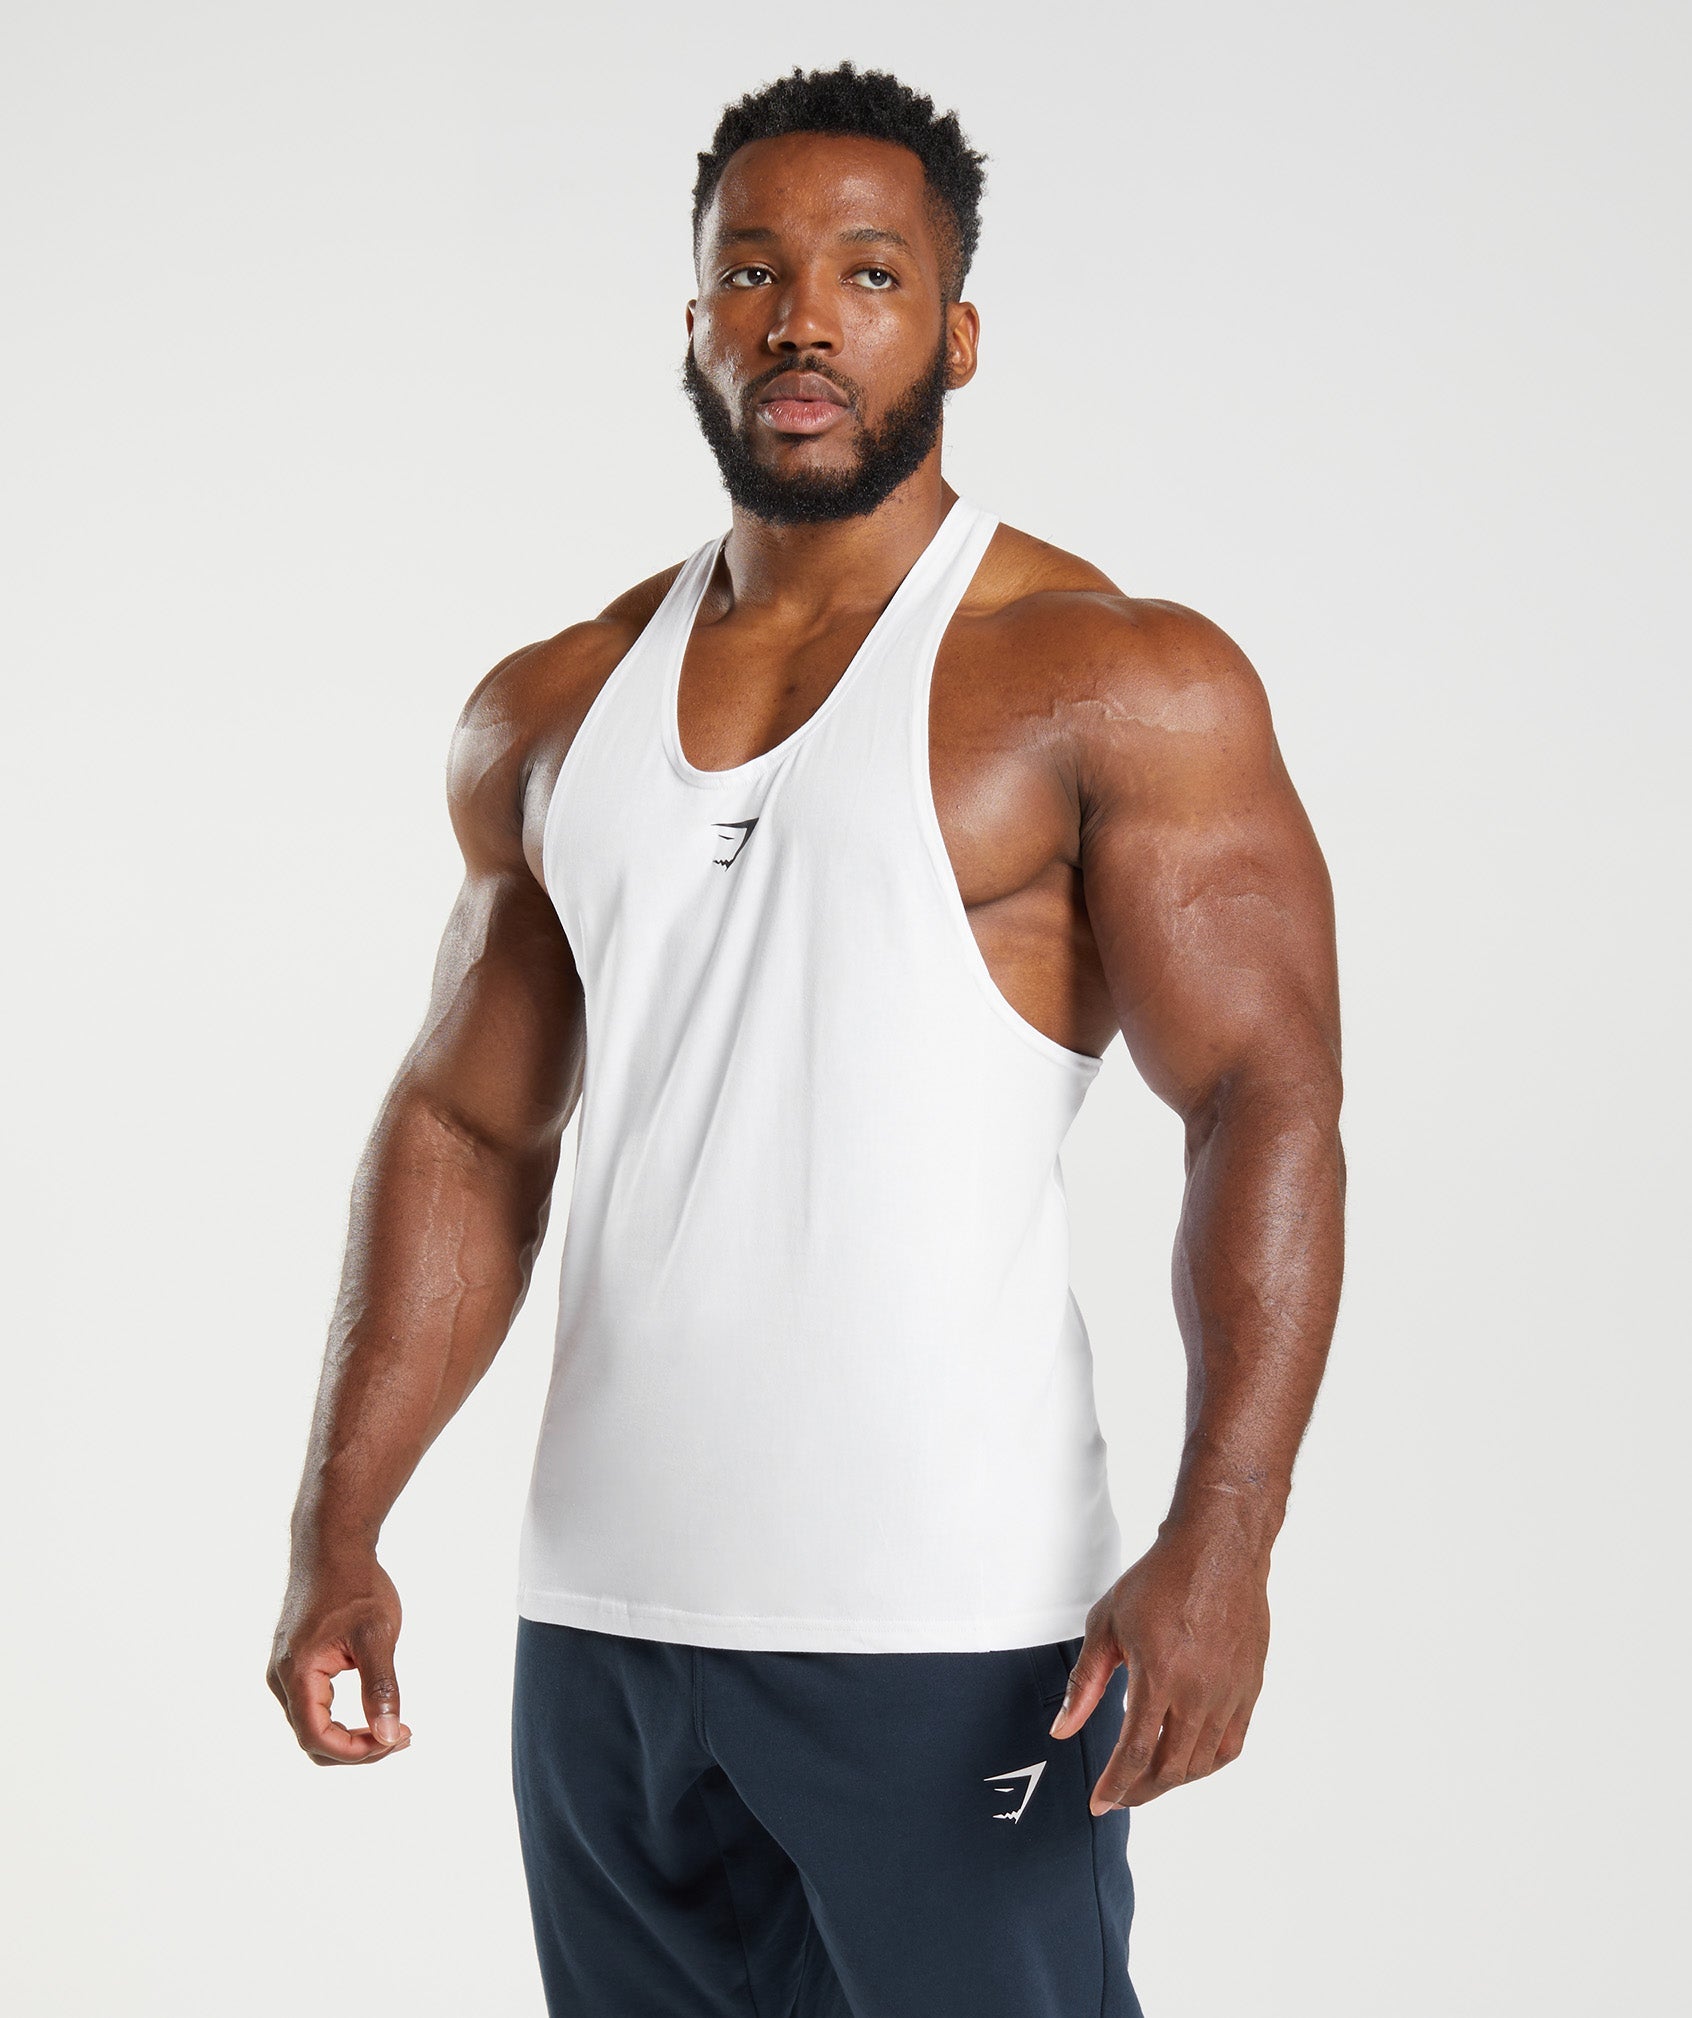 SEMIMAY Men's Gym Bodybuilding Stringer Tank Top Workout Muscle